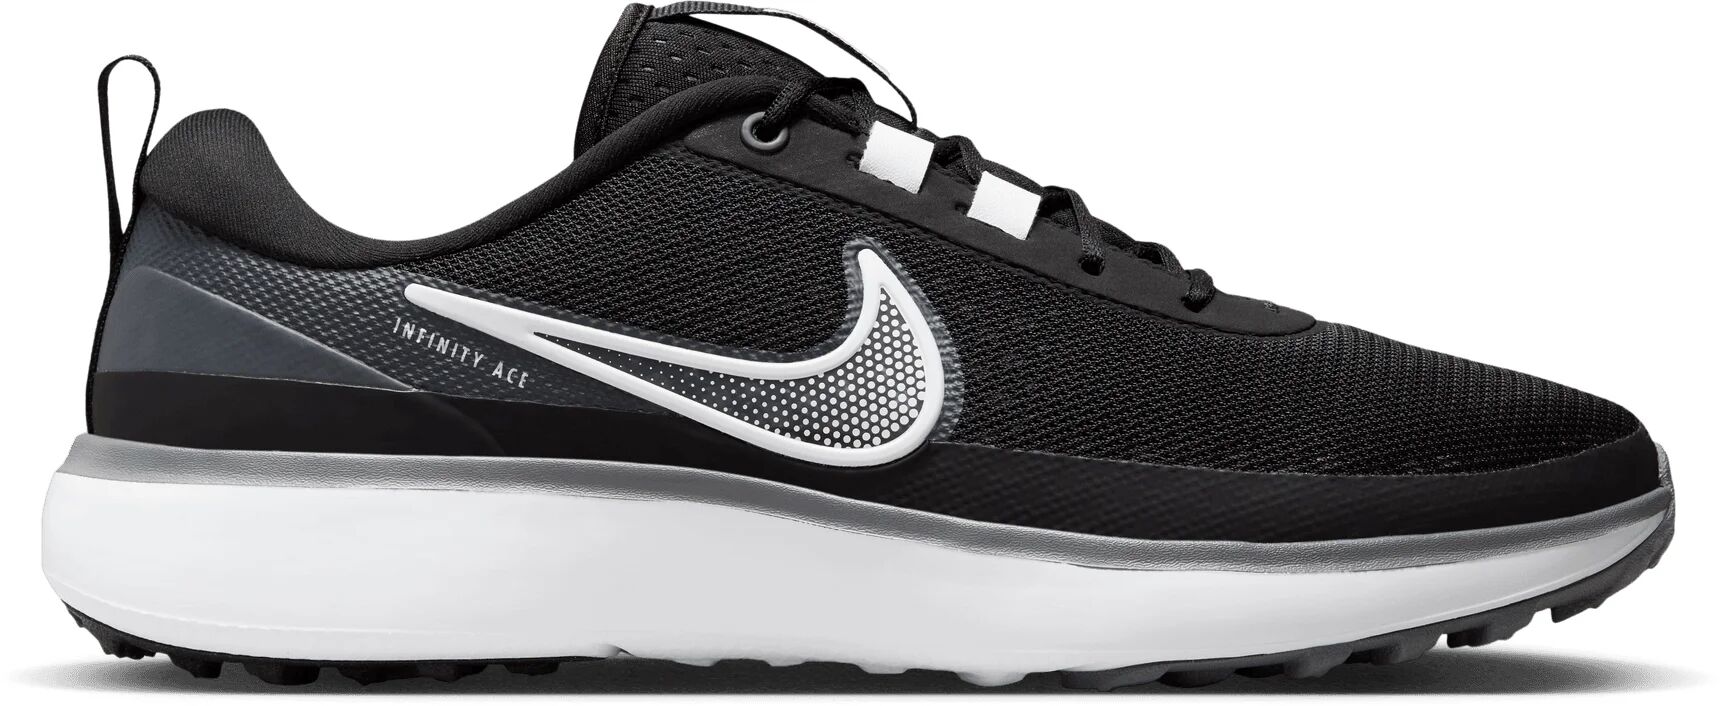 Nike Infinity Ace Next Nature Golf Shoes - Black/Smoke Grey/Iron Grey/White - 7.5 - MEDIUM